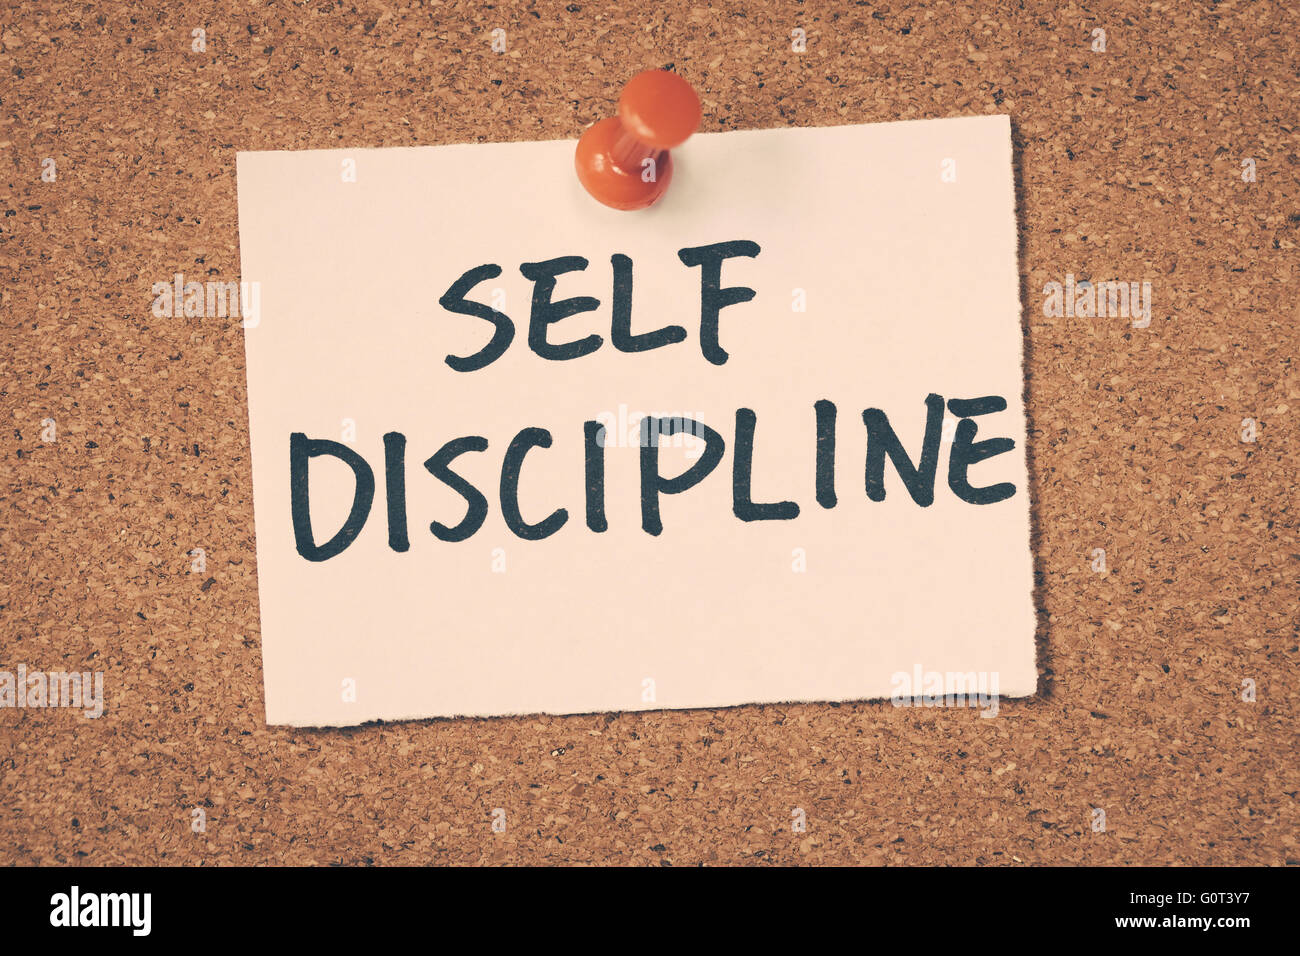 self discipline Stock Photo